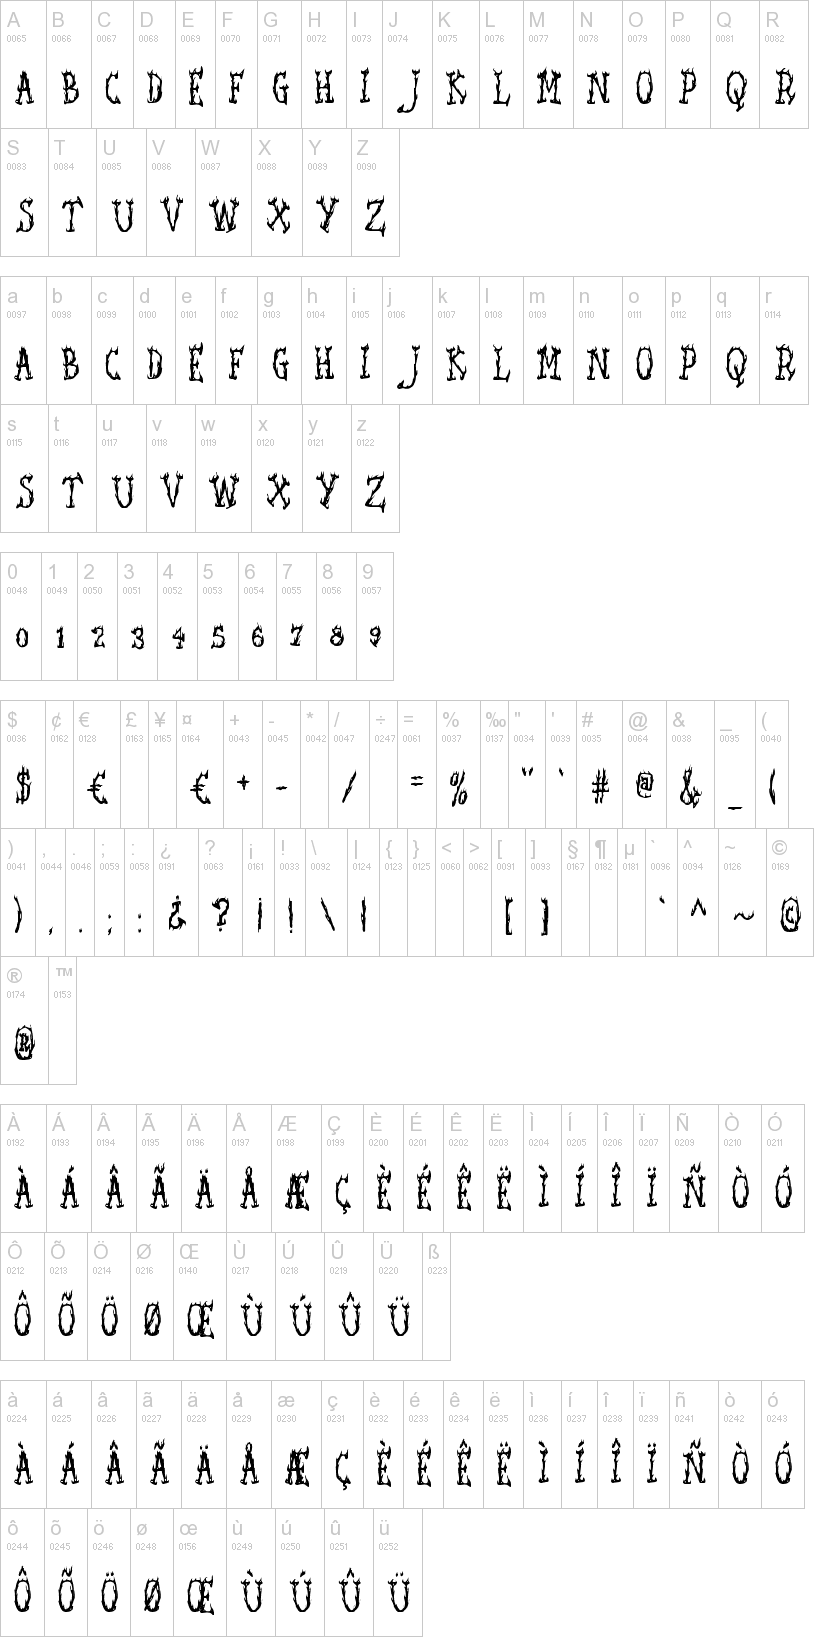 Seaweed Script Regular font - Free fonts on Creazilla